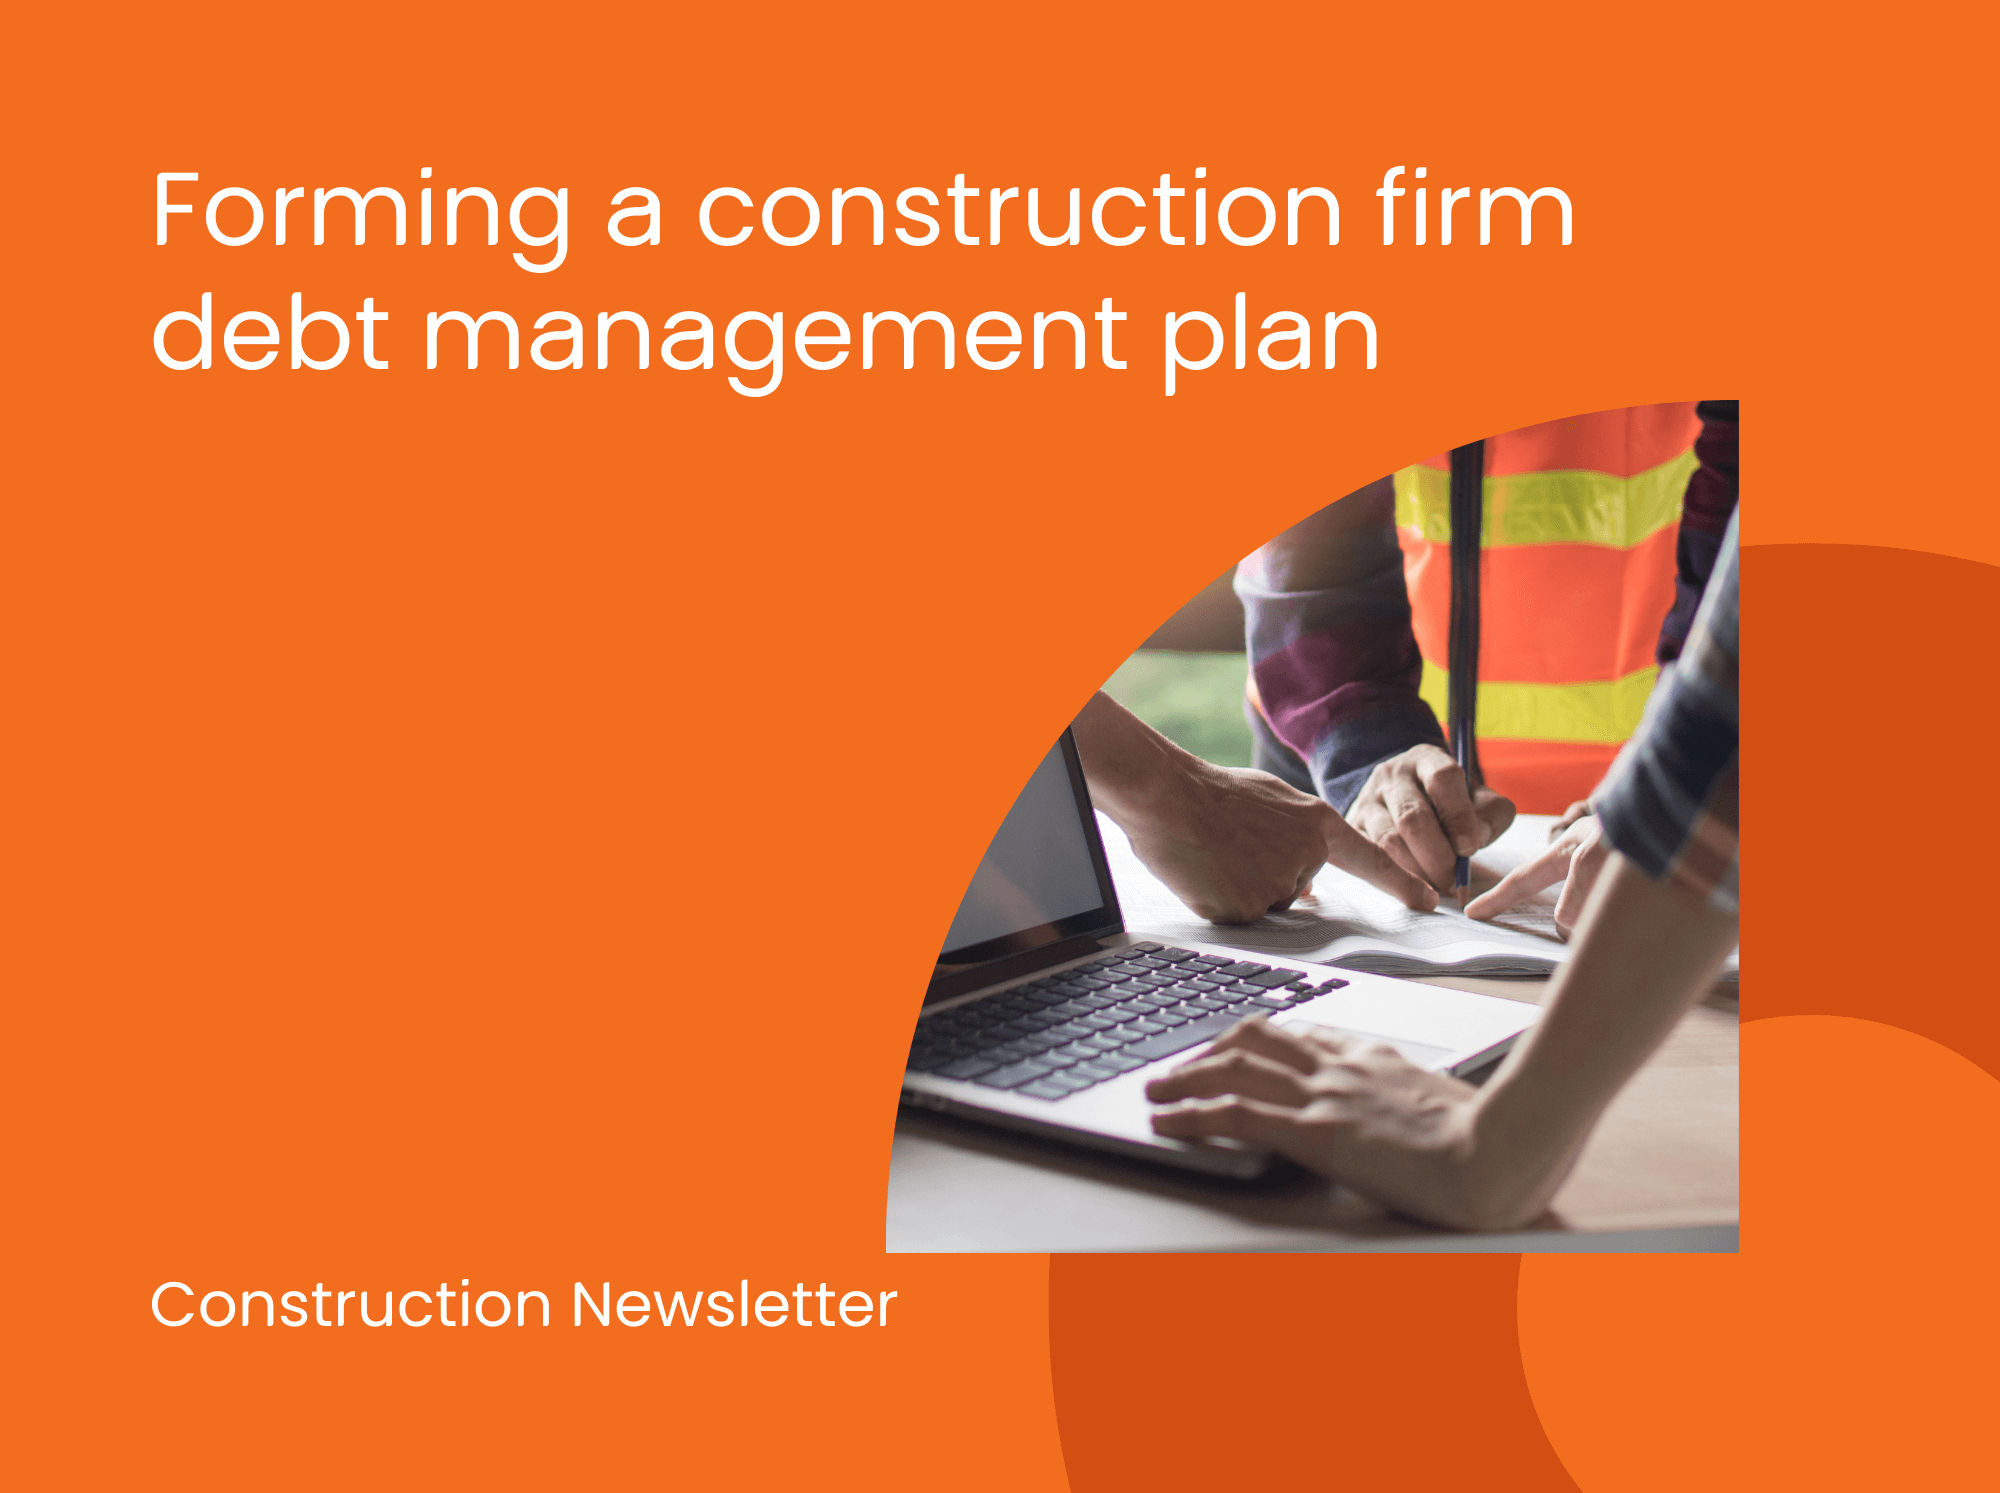 Forming a Construction Firm Debt Management Plan